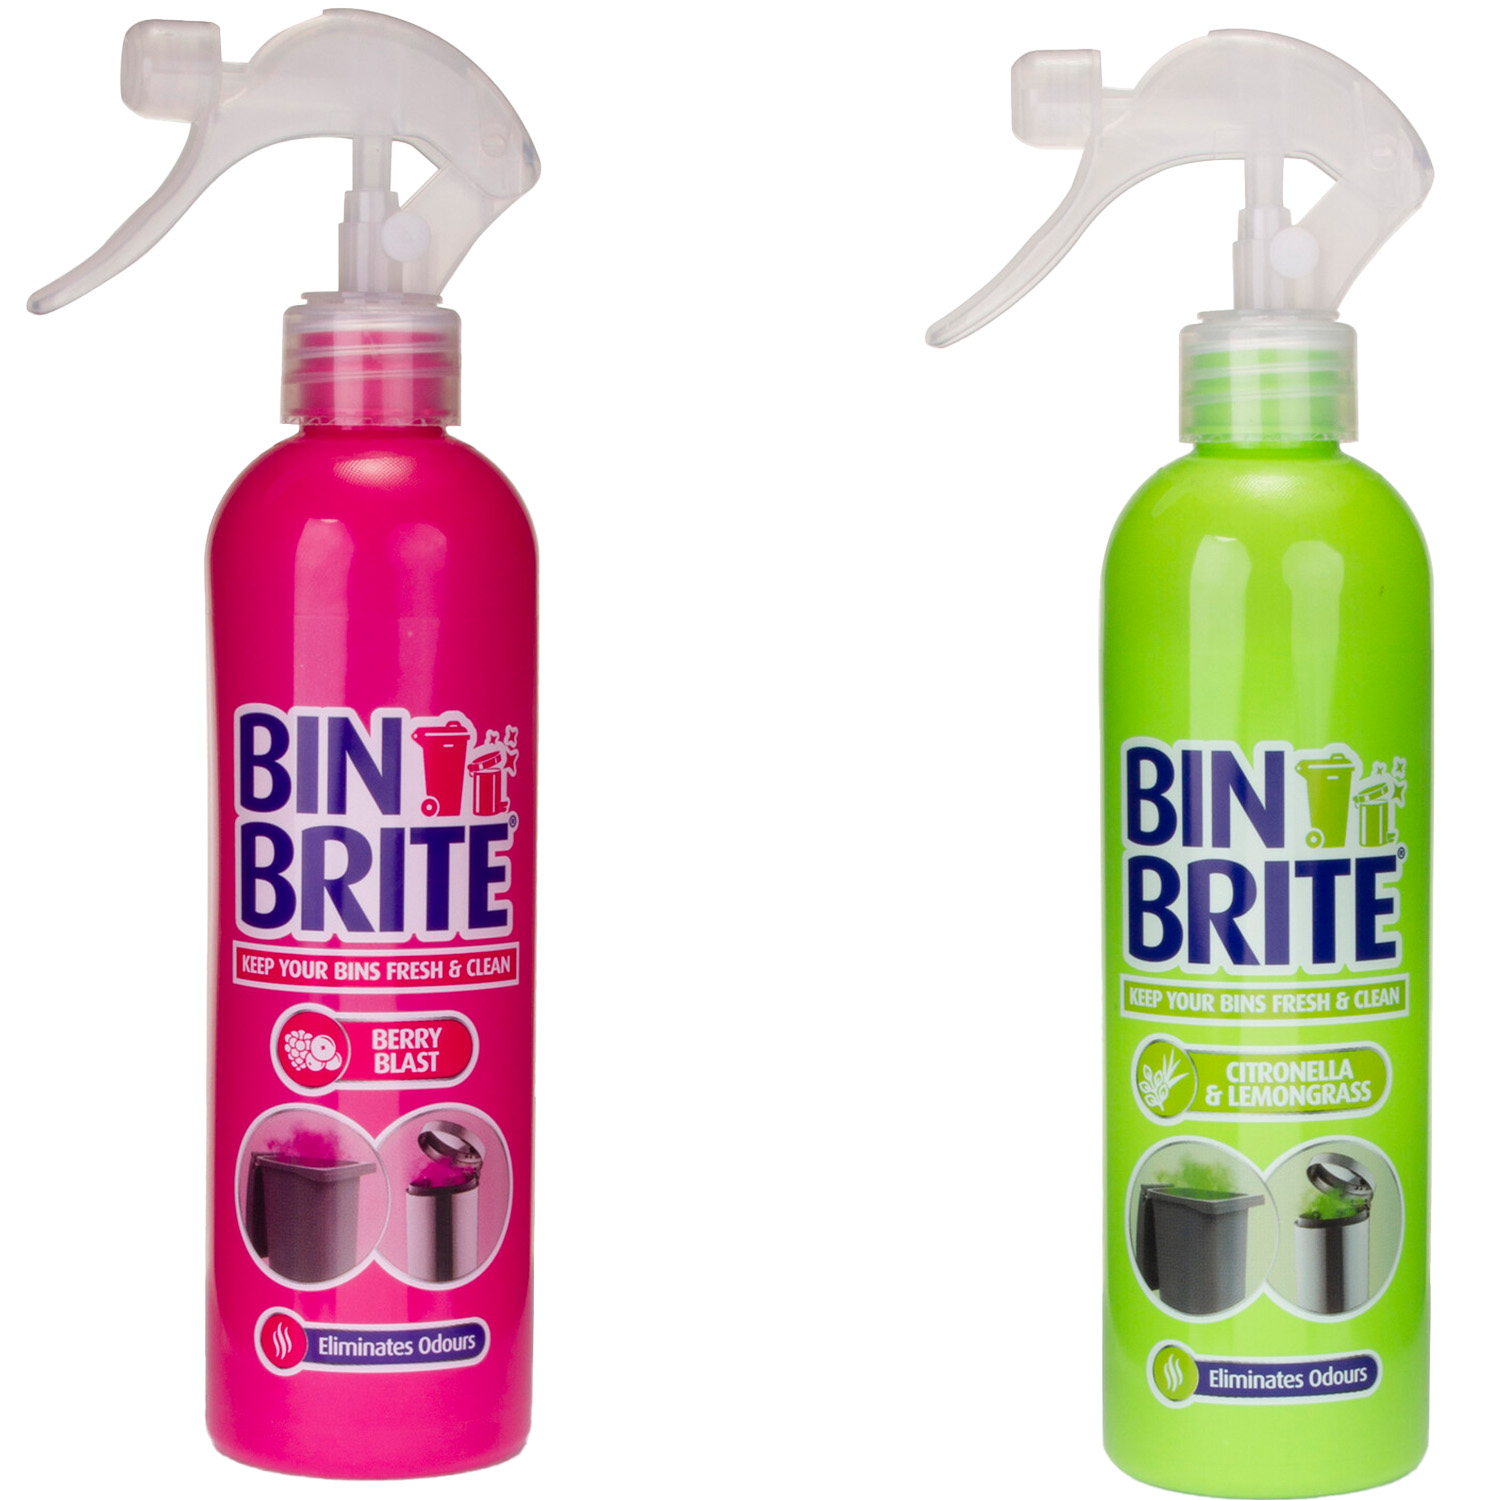 Single Bin Brite Odour Neutraliser Spray in Assorted styles Image